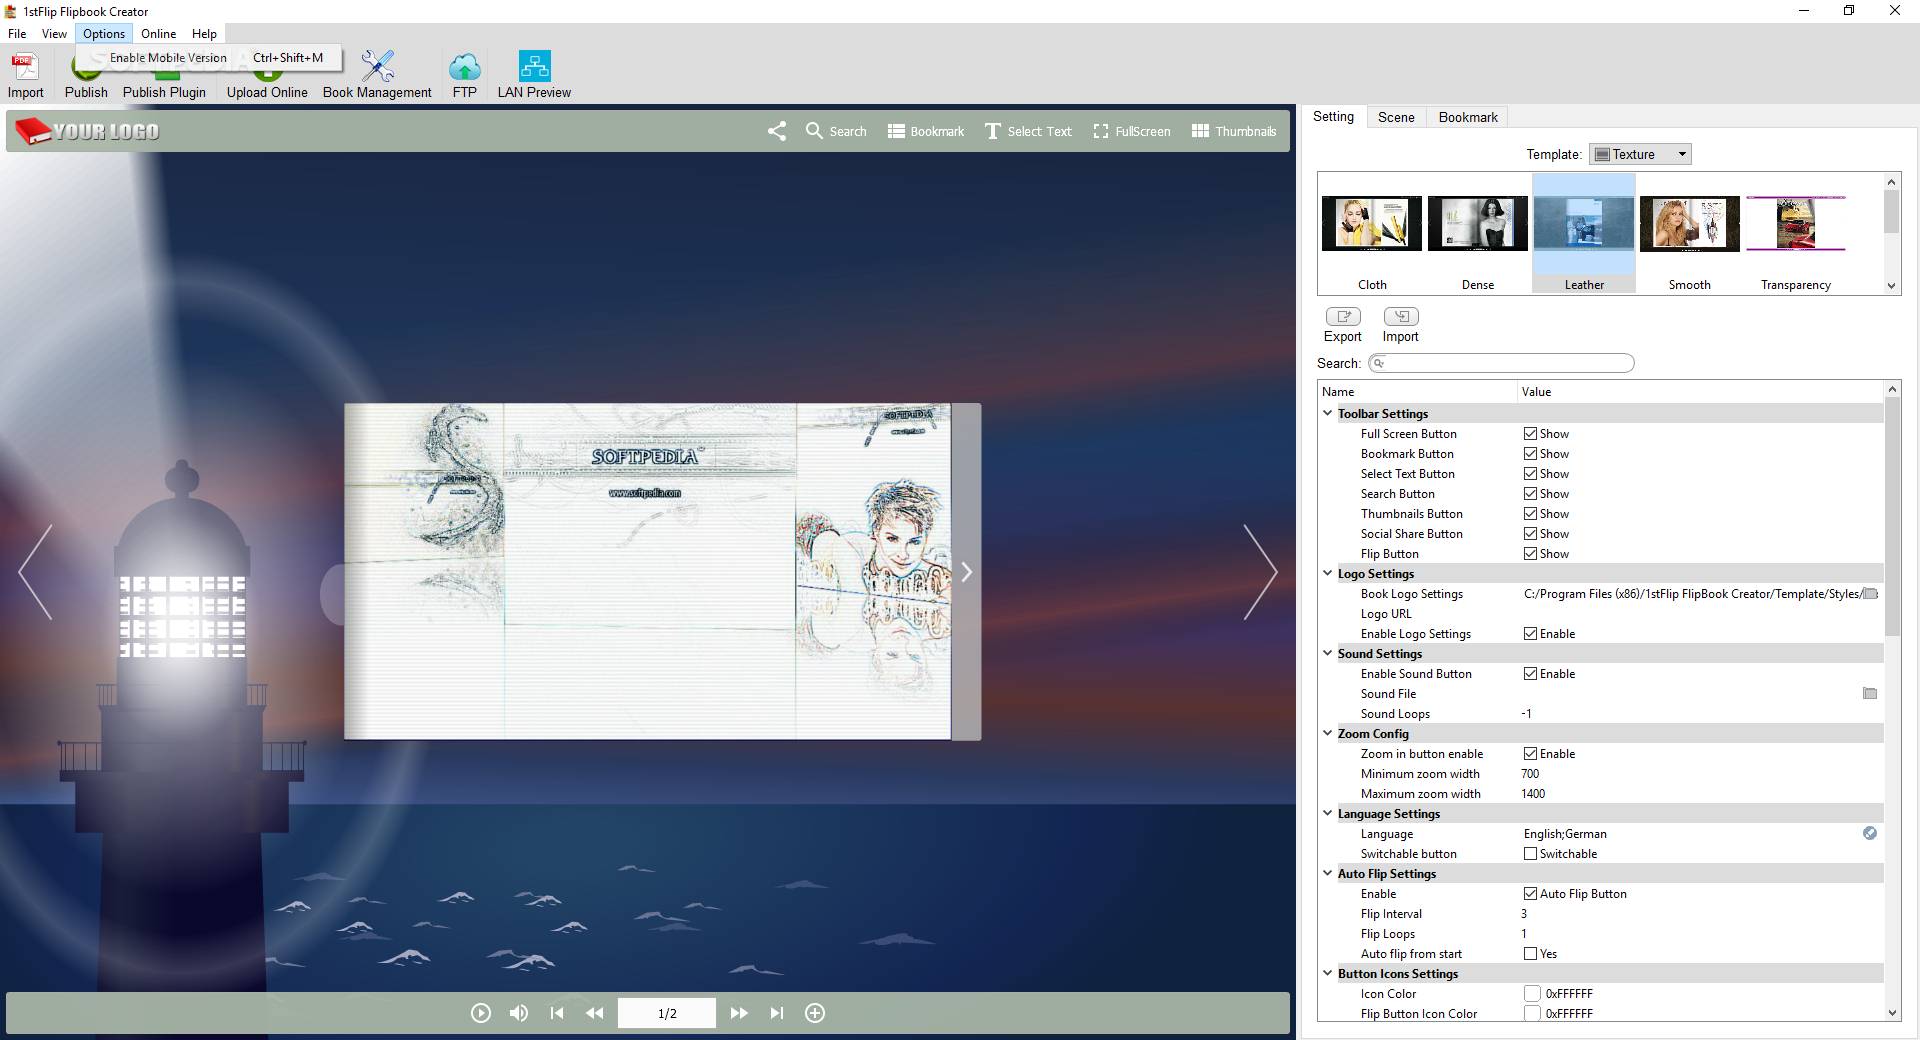 instal the last version for ios 1stFlip FlipBook Creator Pro 2.7.32